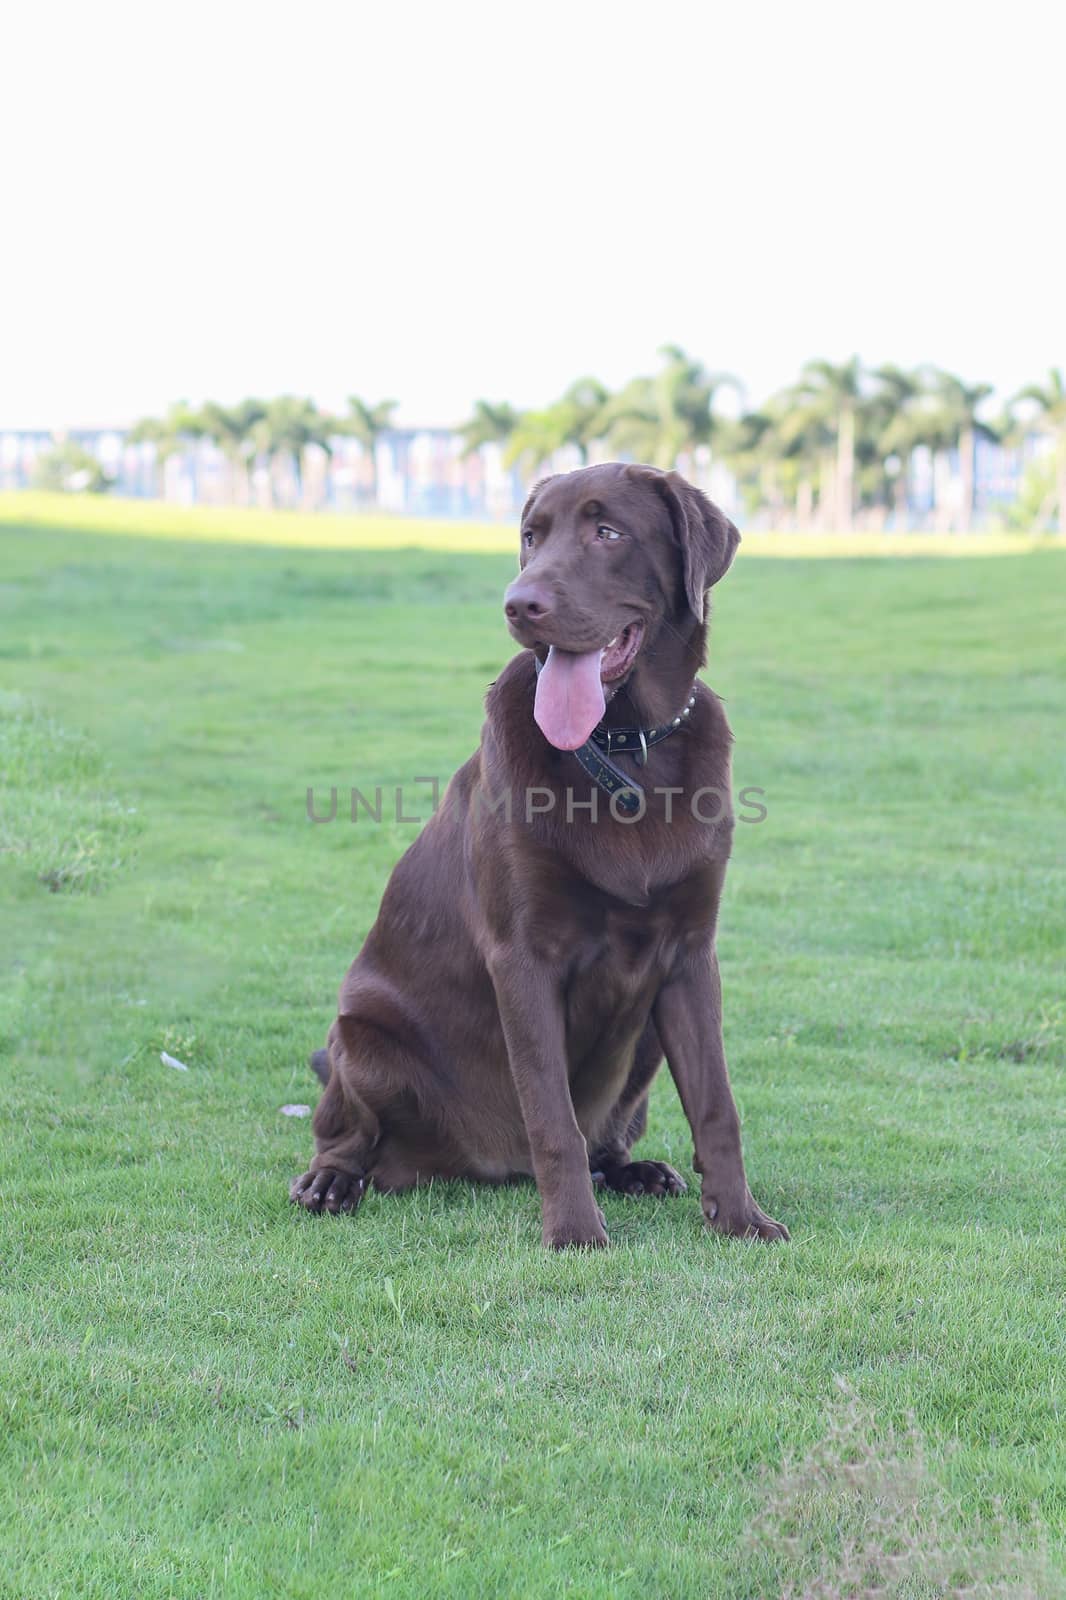 a dog golden retriever in the park